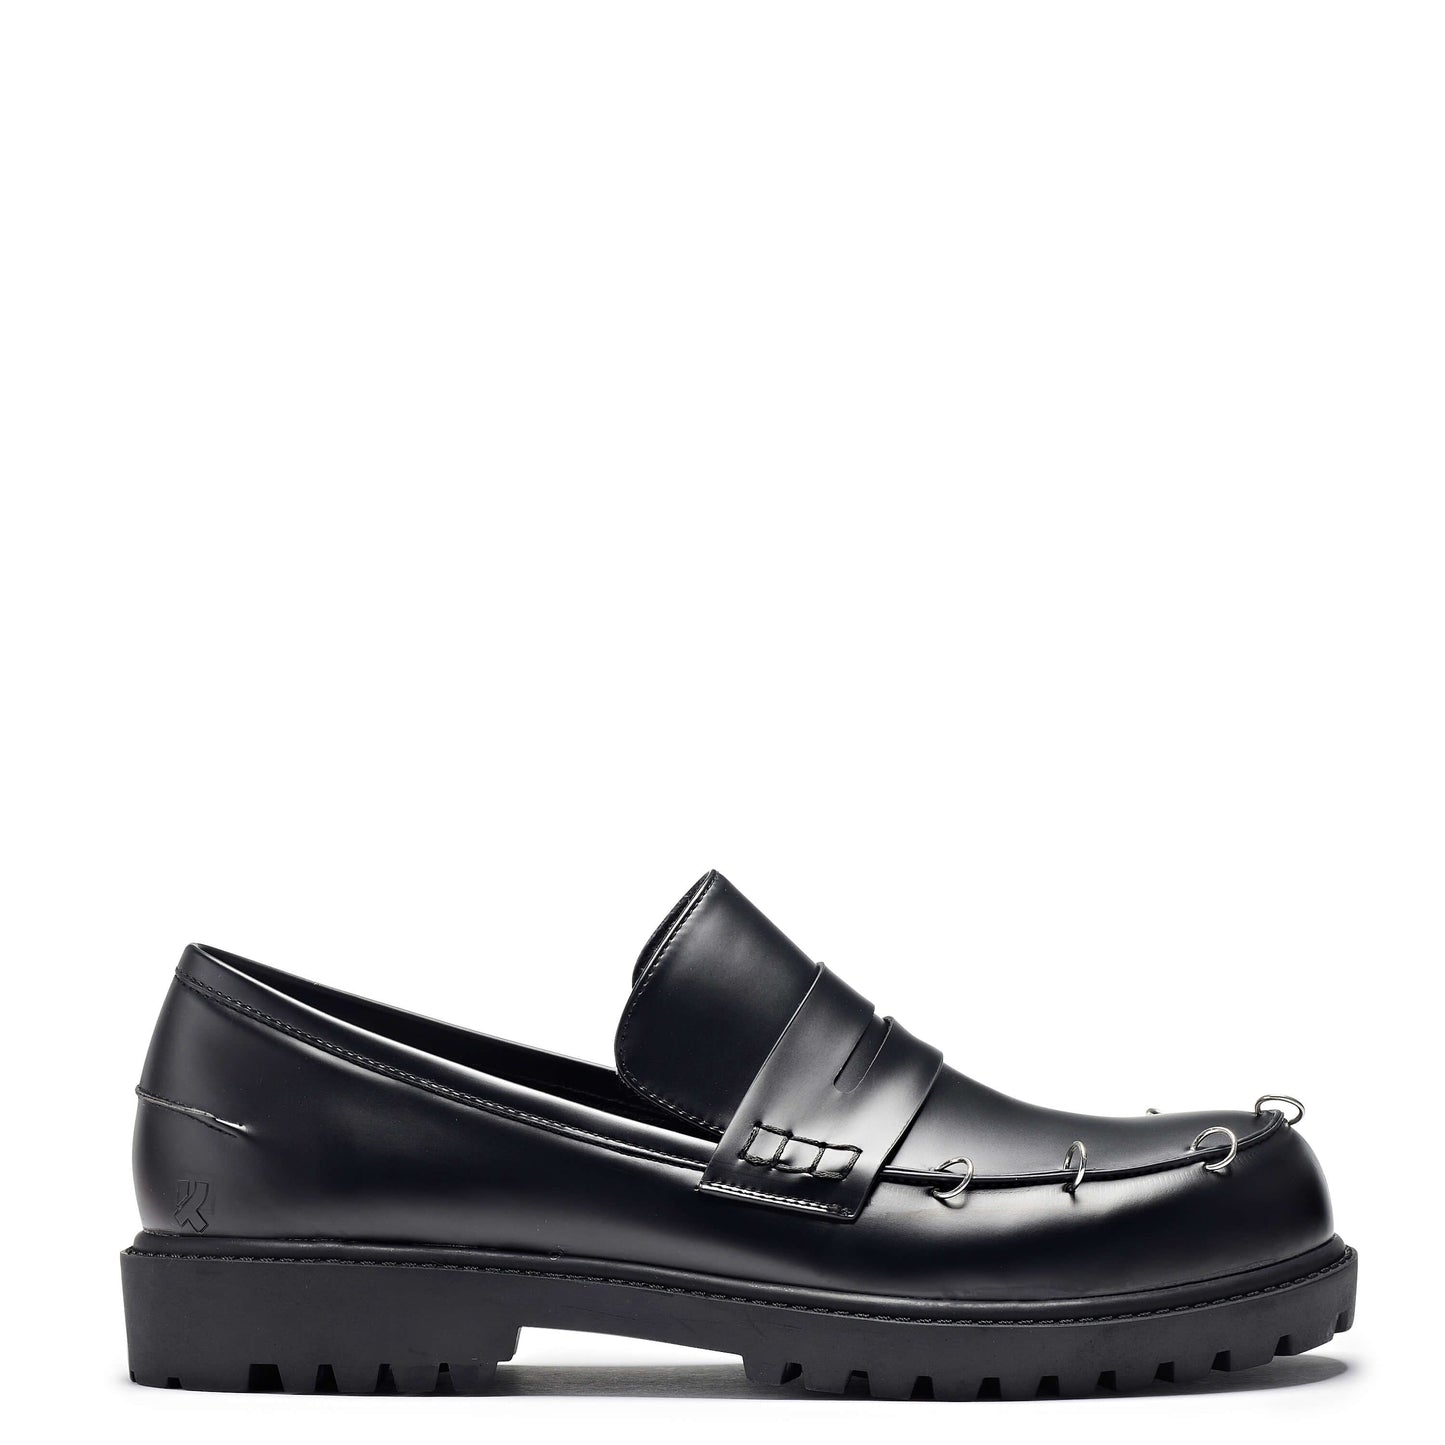 The Kaiden Pierced Men's Loafers - Shoes - KOI Footwear - Black - Side View